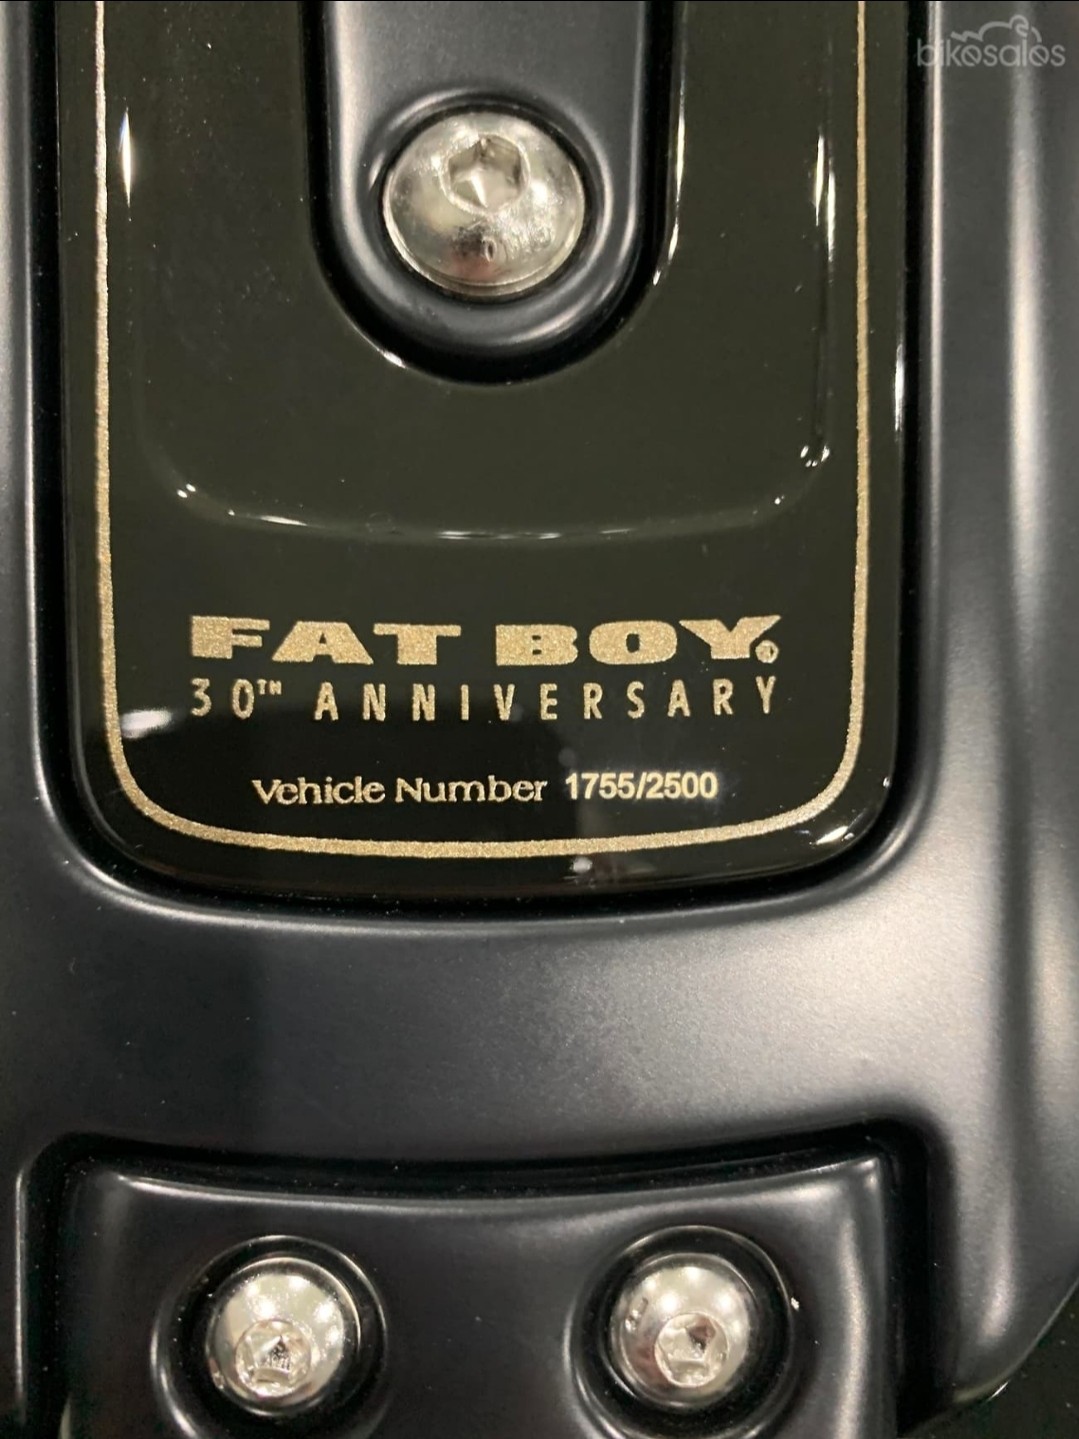 2020 Harley-Davidson FAT BOY 30th Anniversary LIMITED EDITION - tas